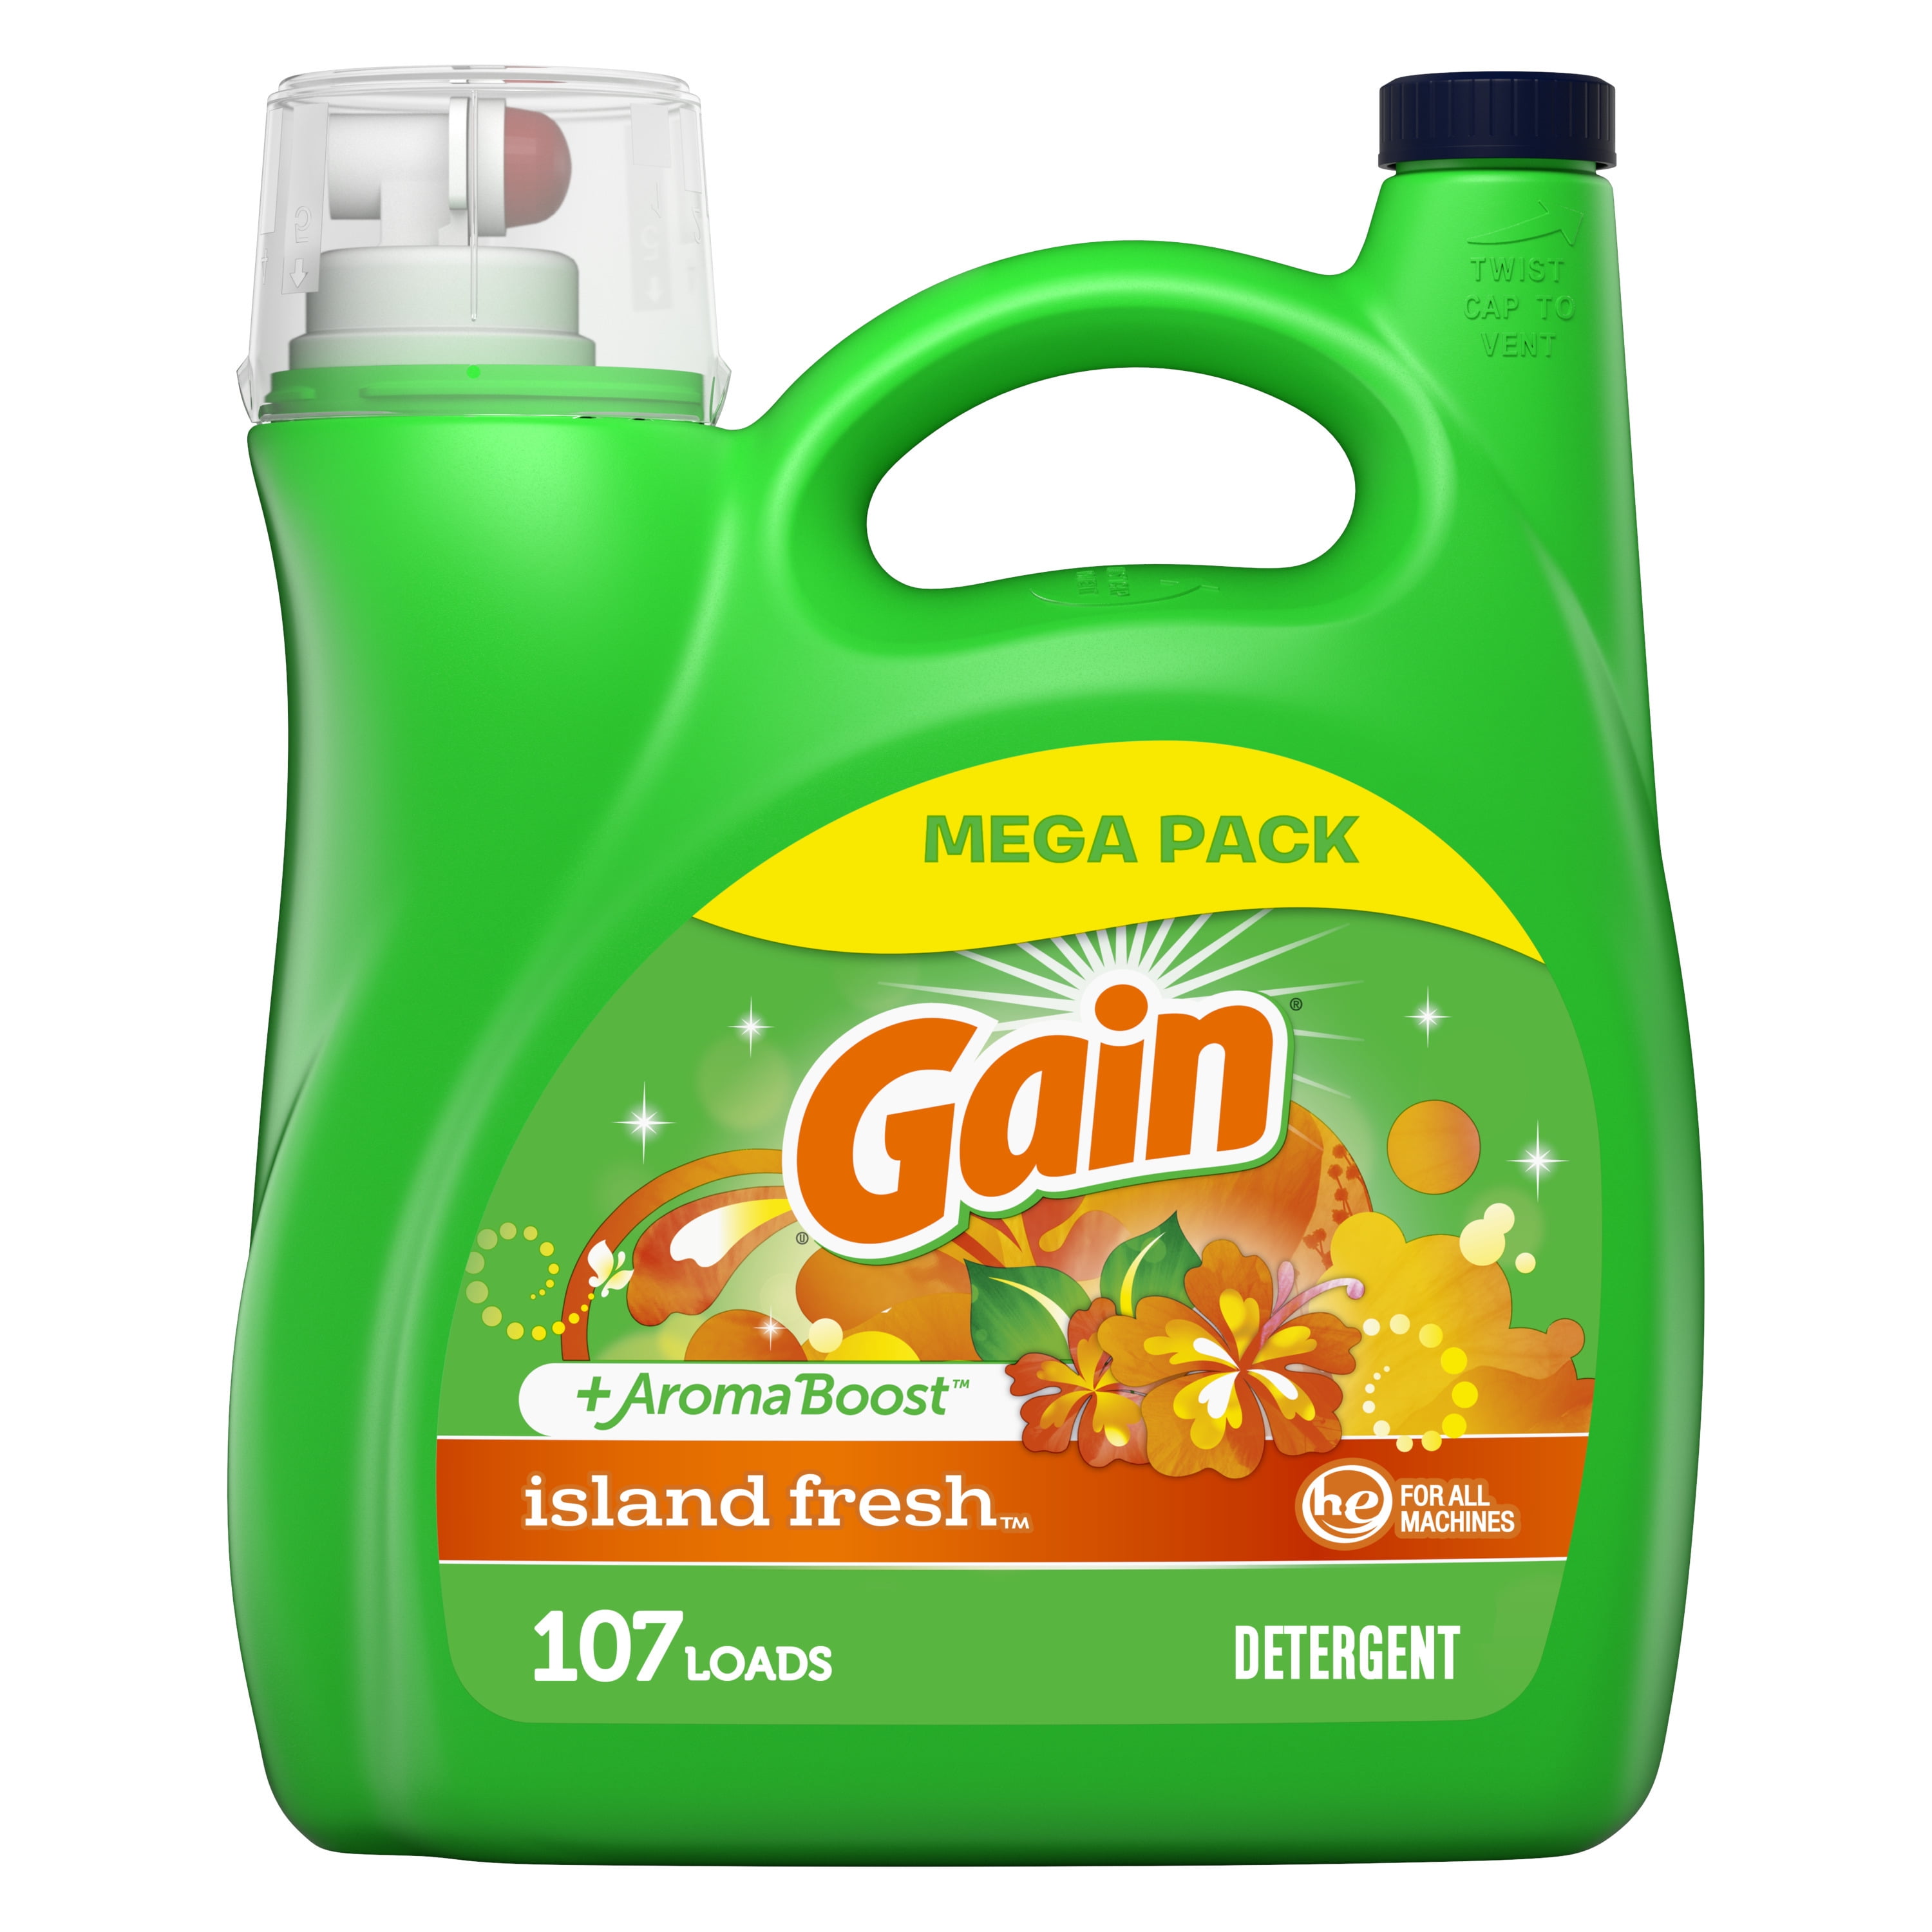 Gain + Aroma Boost Liquid Laundry Detergent, Island Fresh Scent, 107 Loads, 154 fl oz